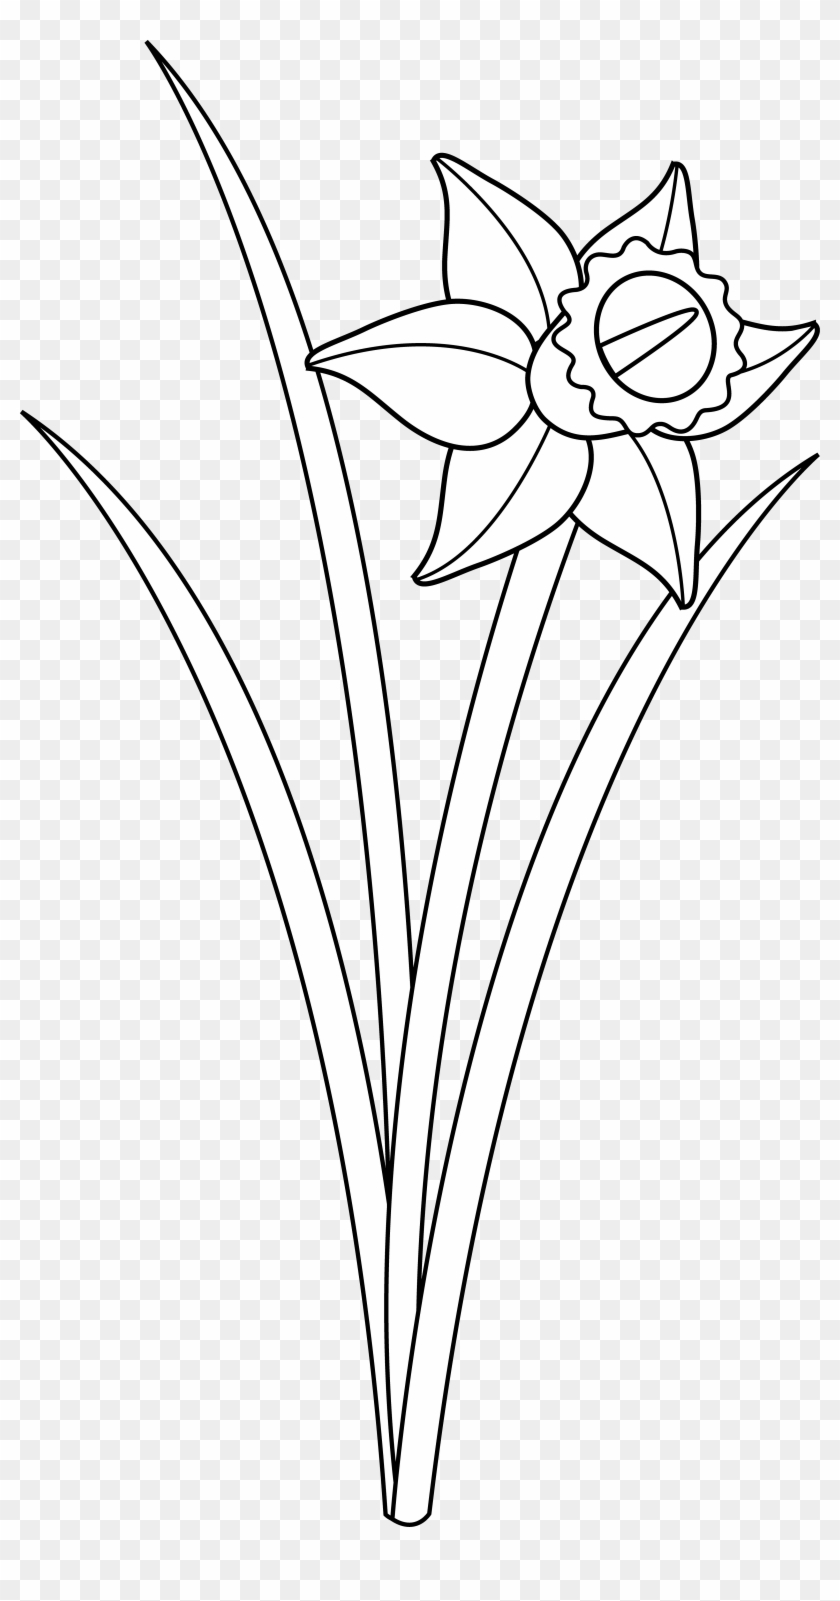 Daffodil Flower Clip Art - Outline Of A Daffodil #1211436